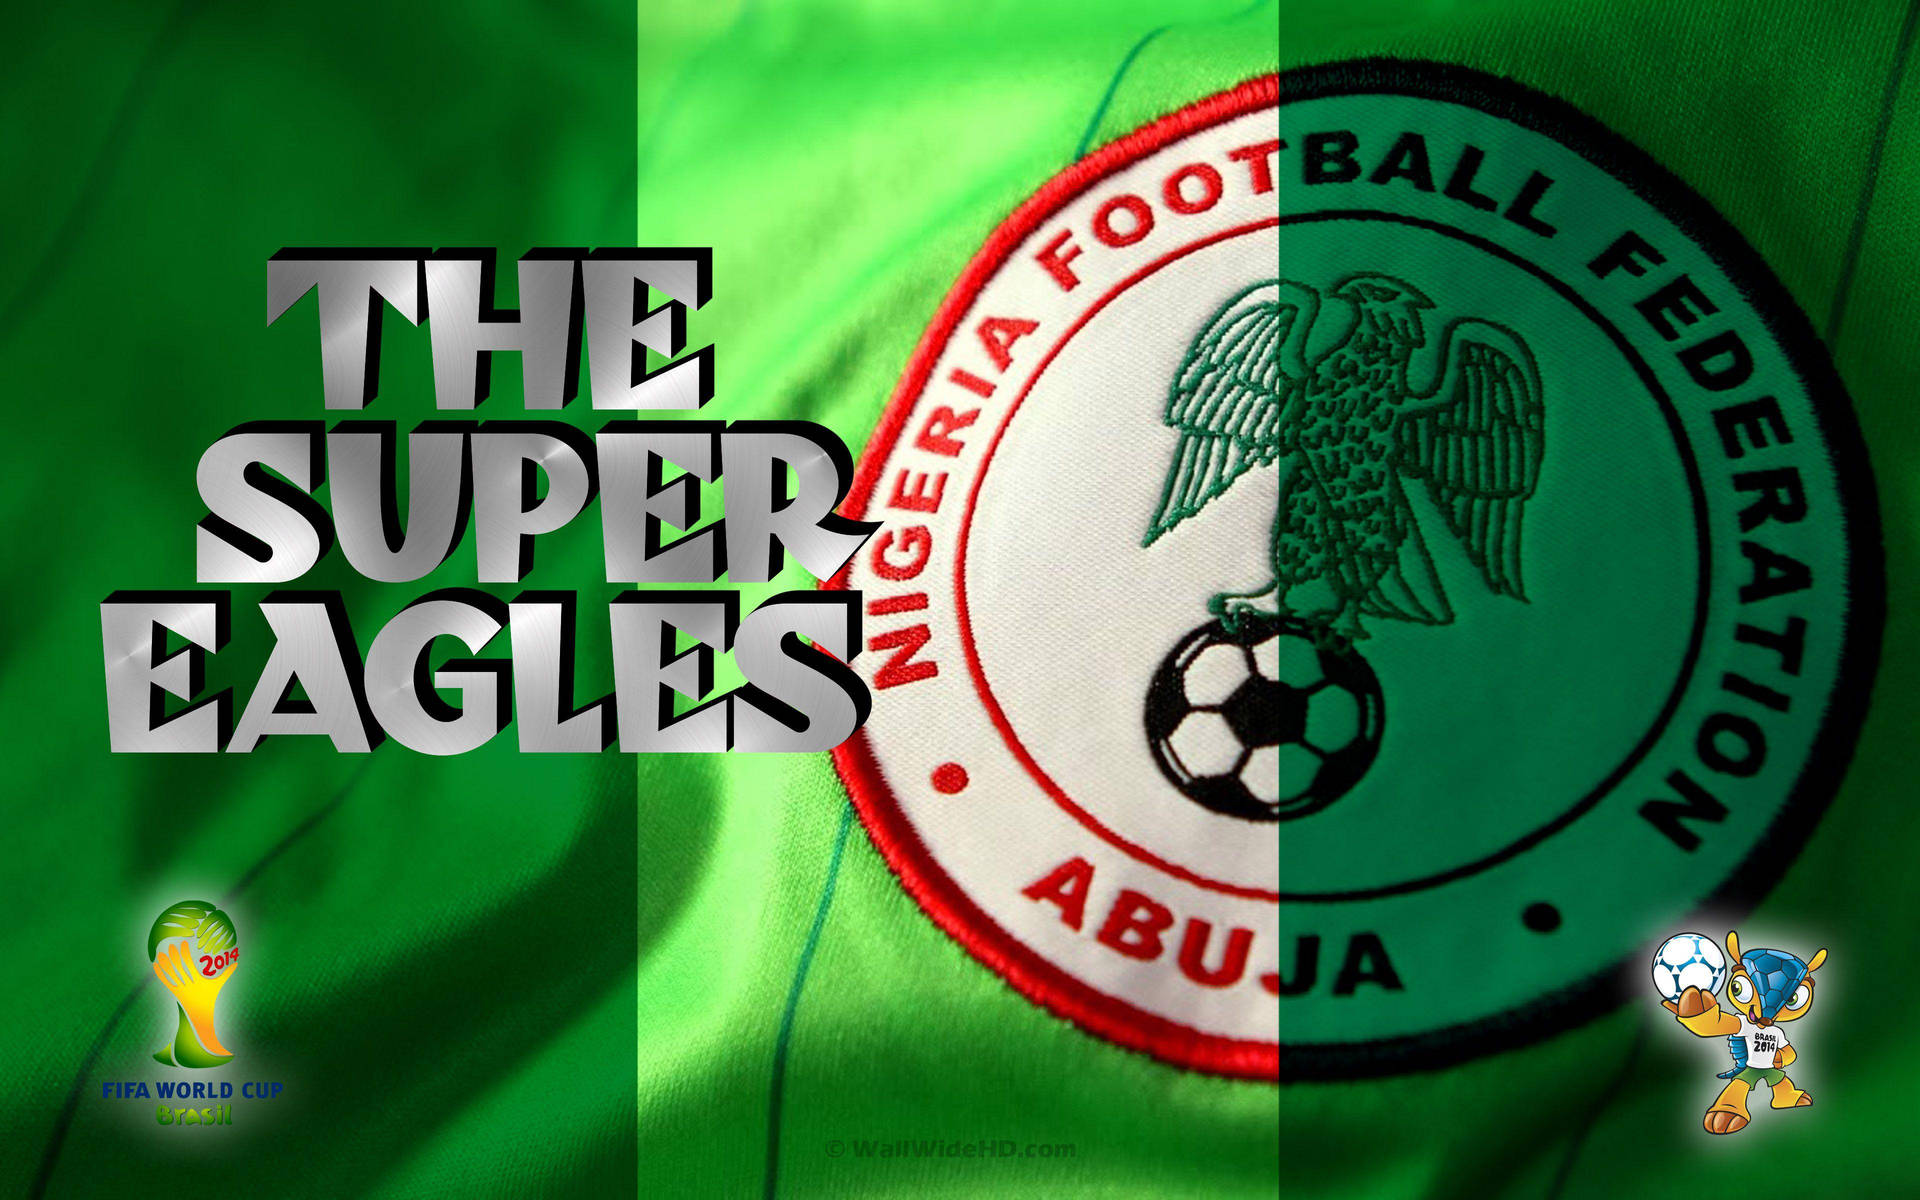 Nigeria Football Team Patch